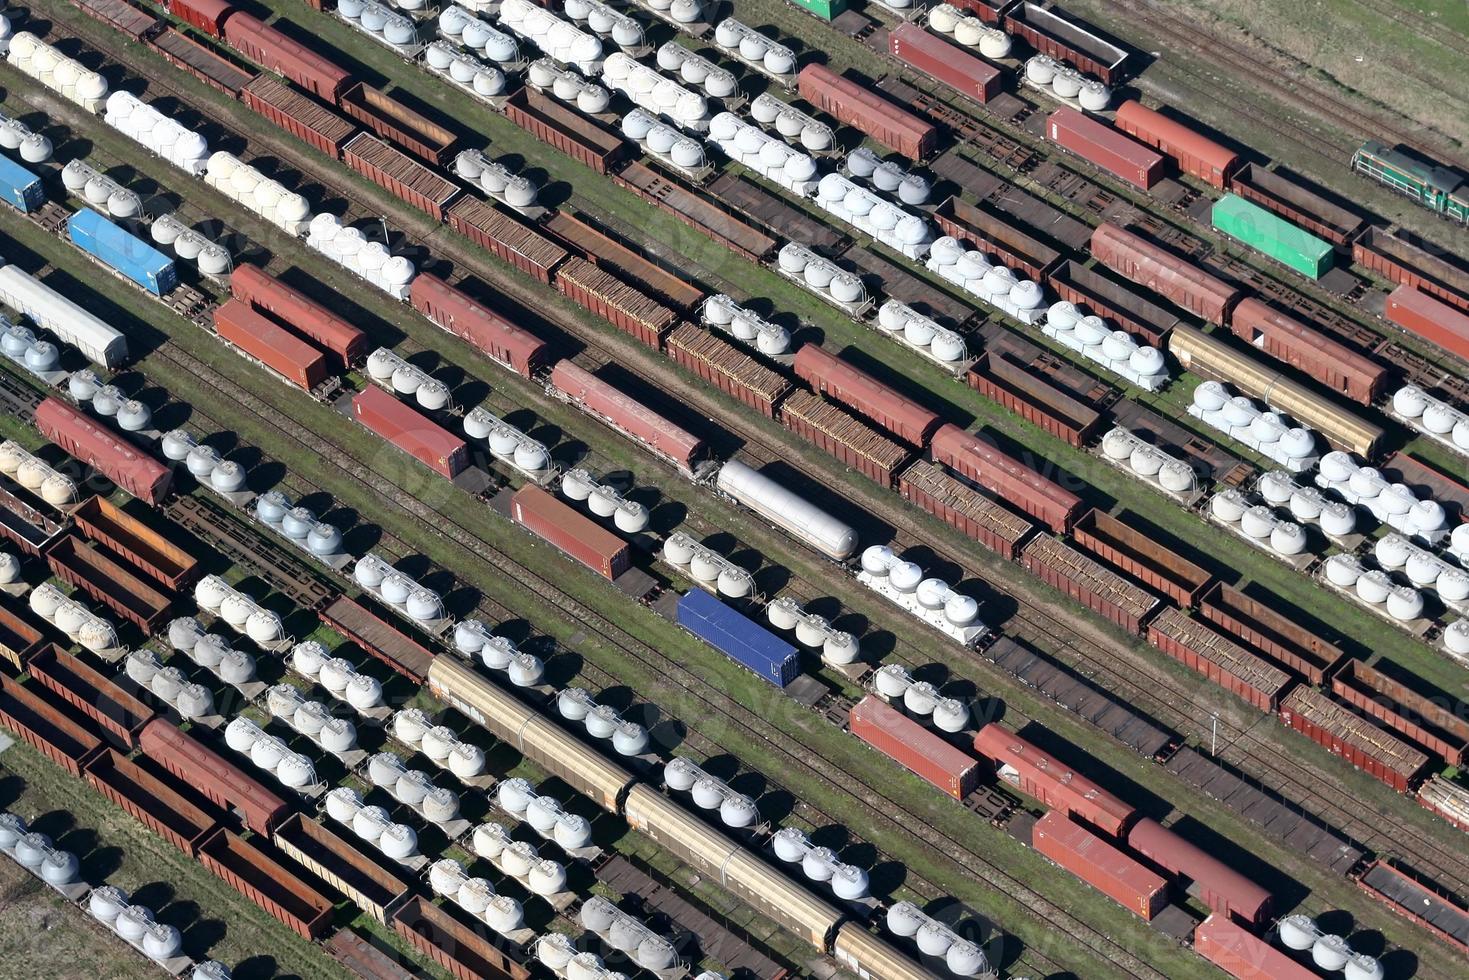 Cargo train storage aerial view photo